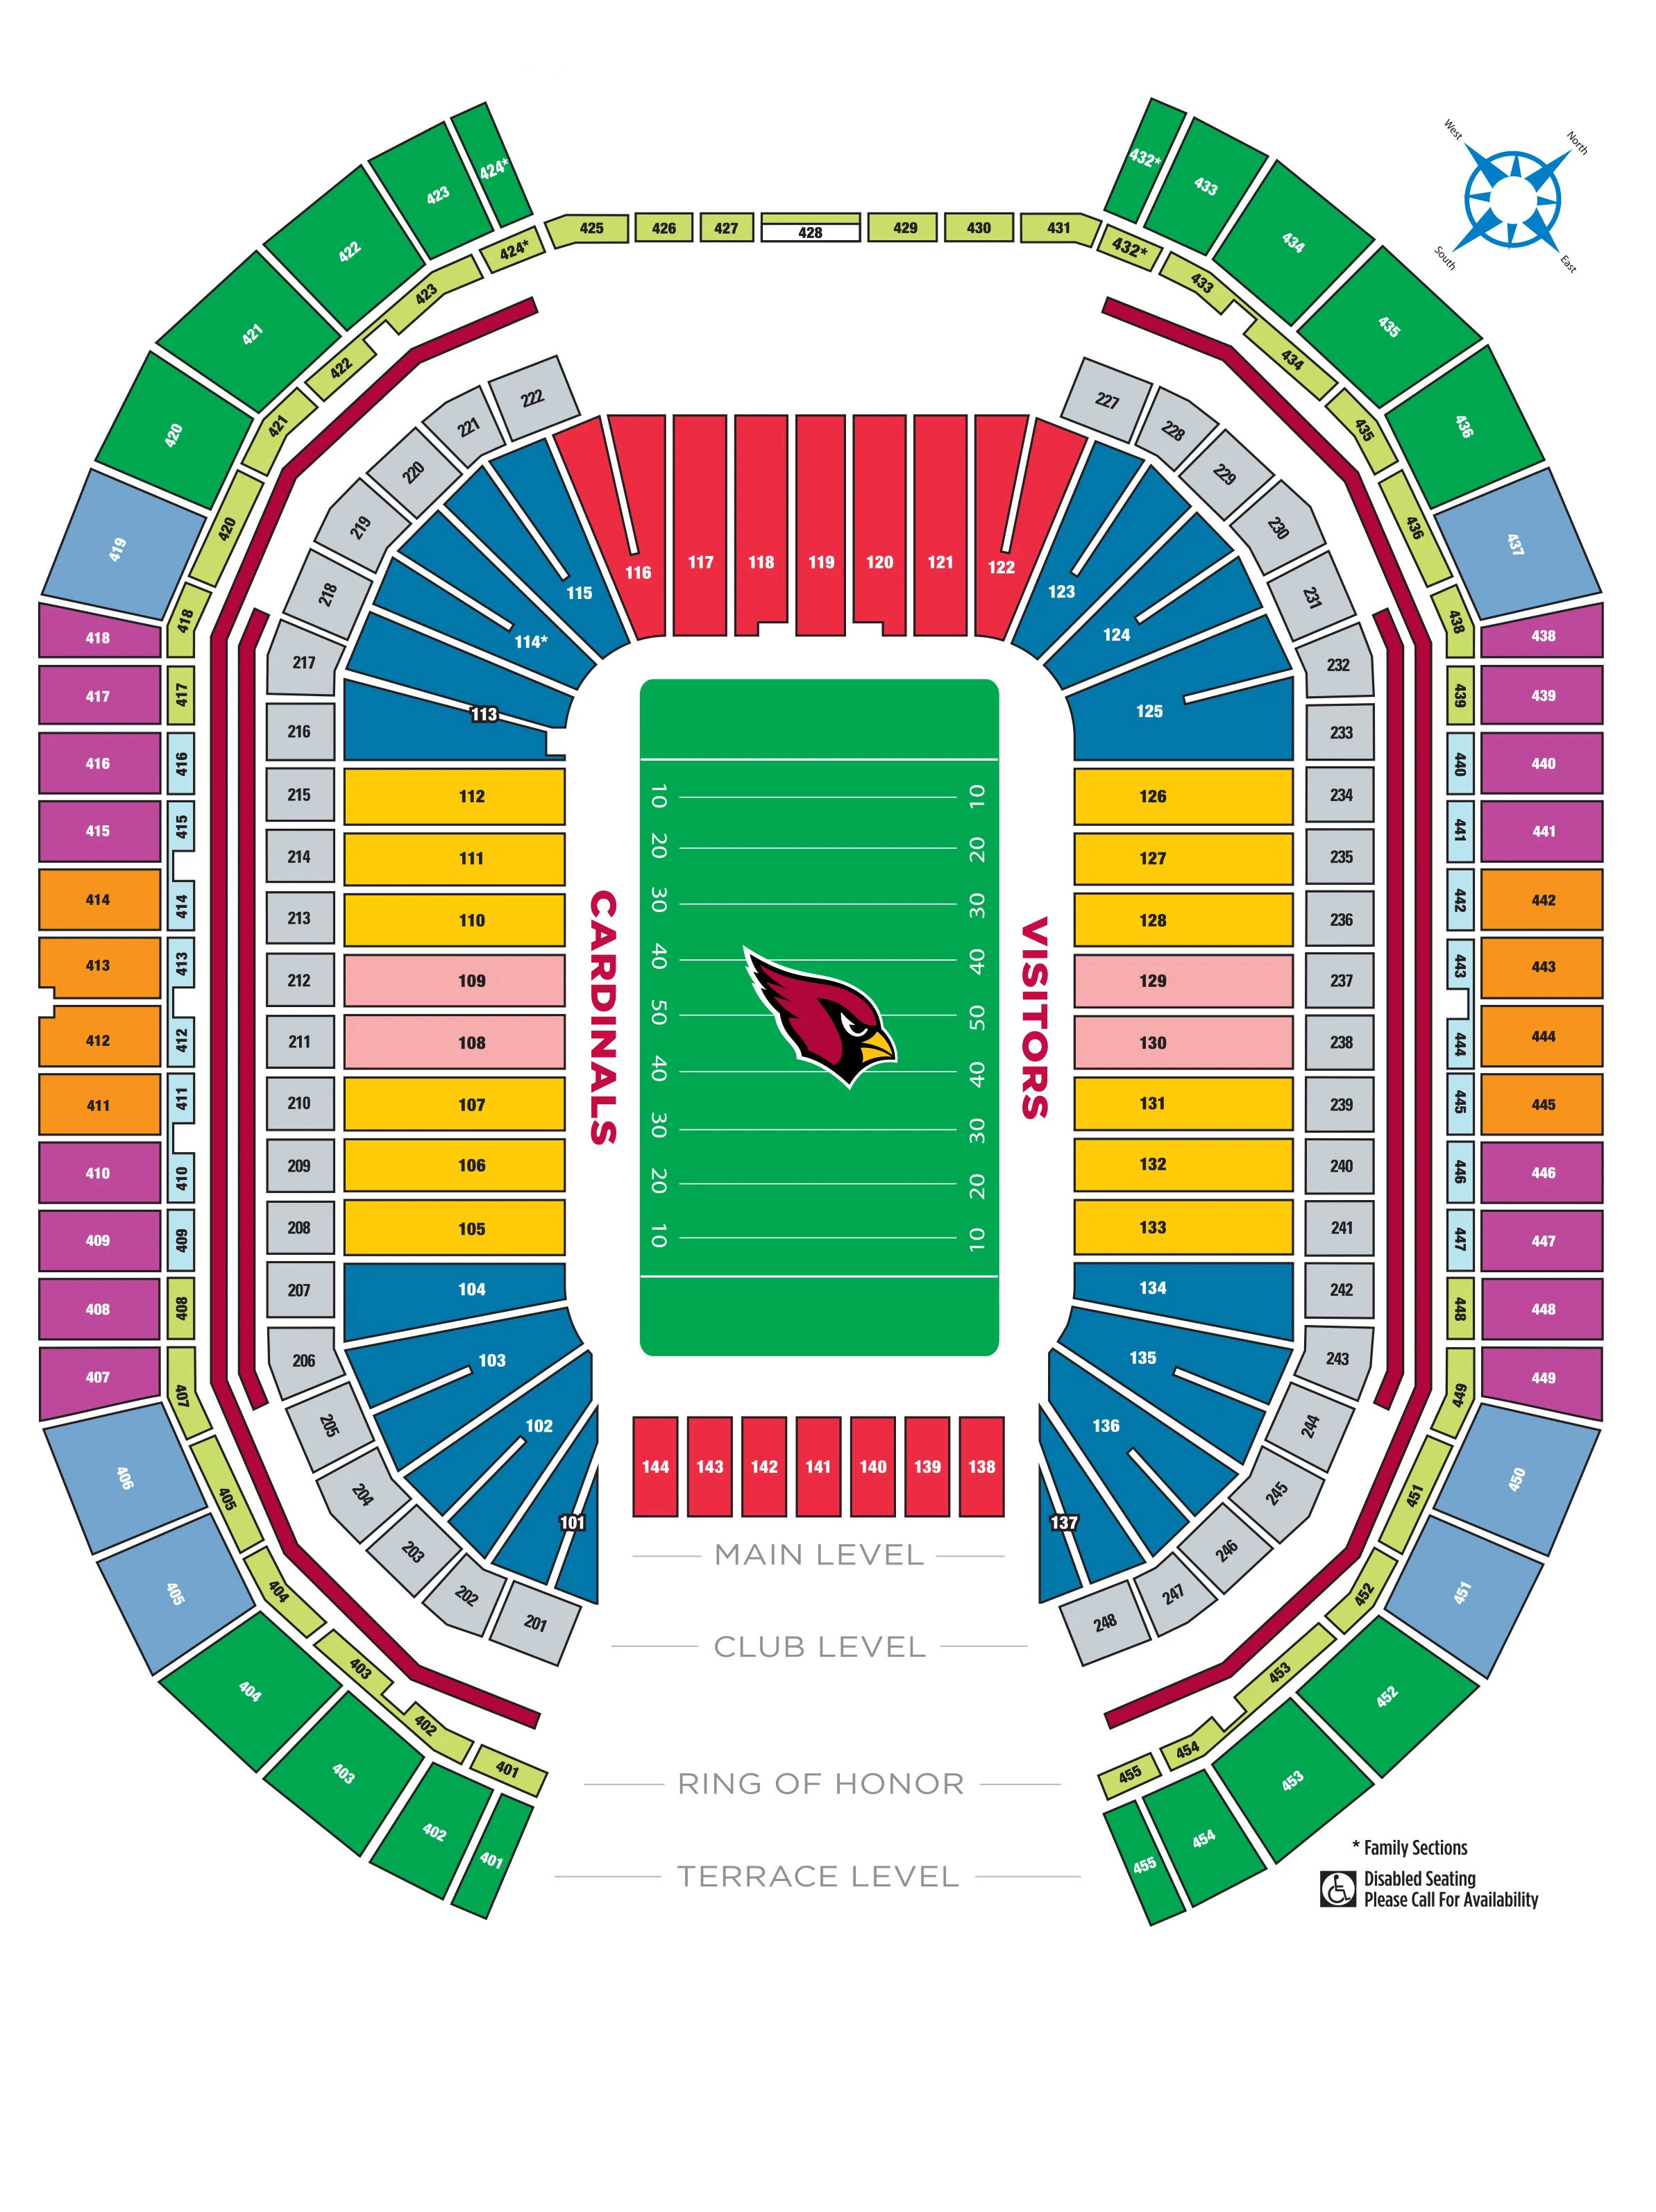 State Farm Stadium seating chart